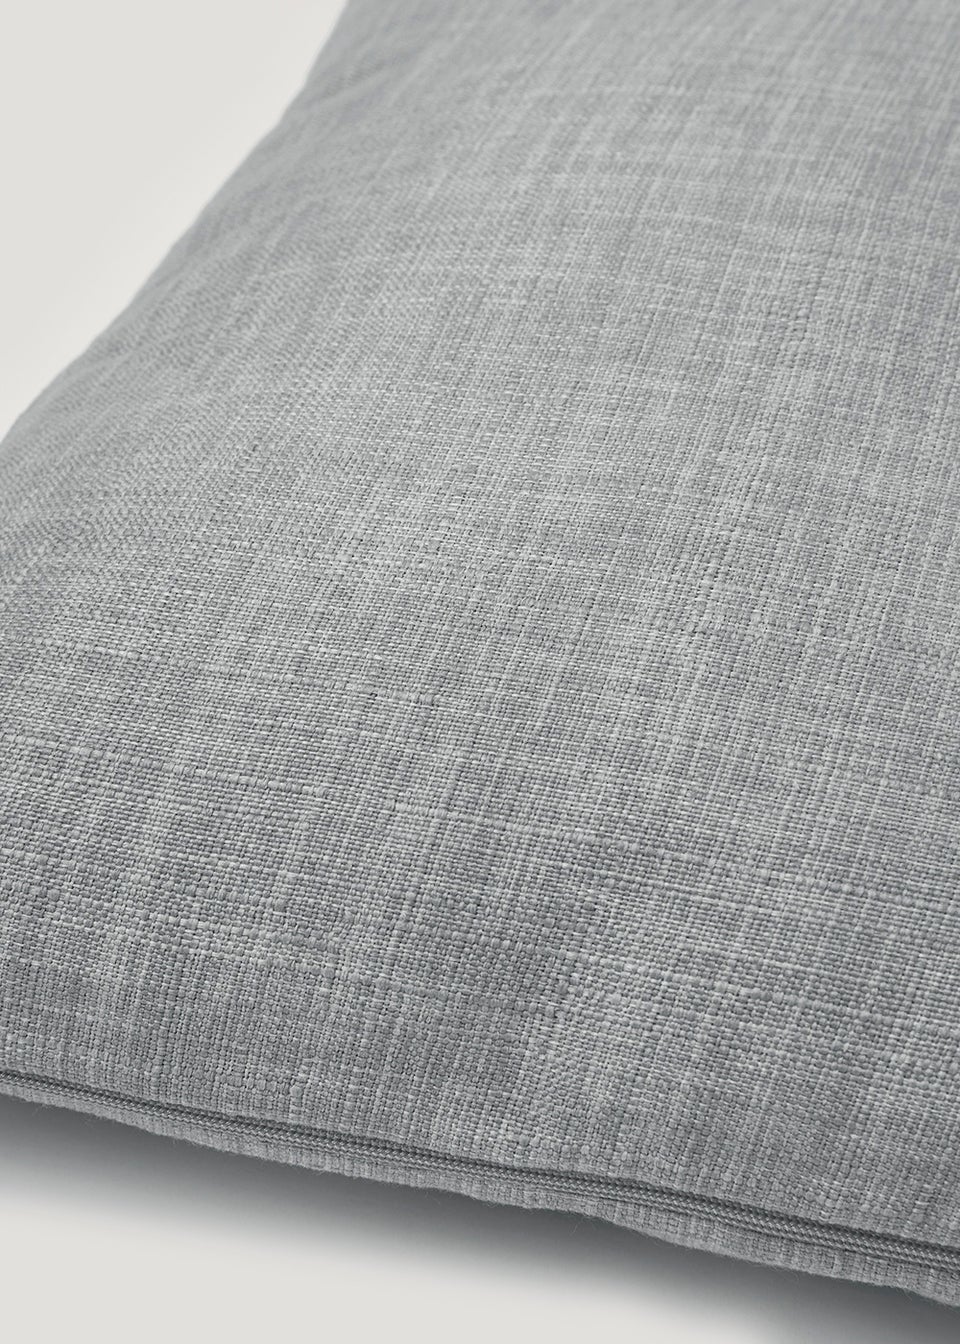 Grey Linen-Look Cushion (43cm x 43cm)